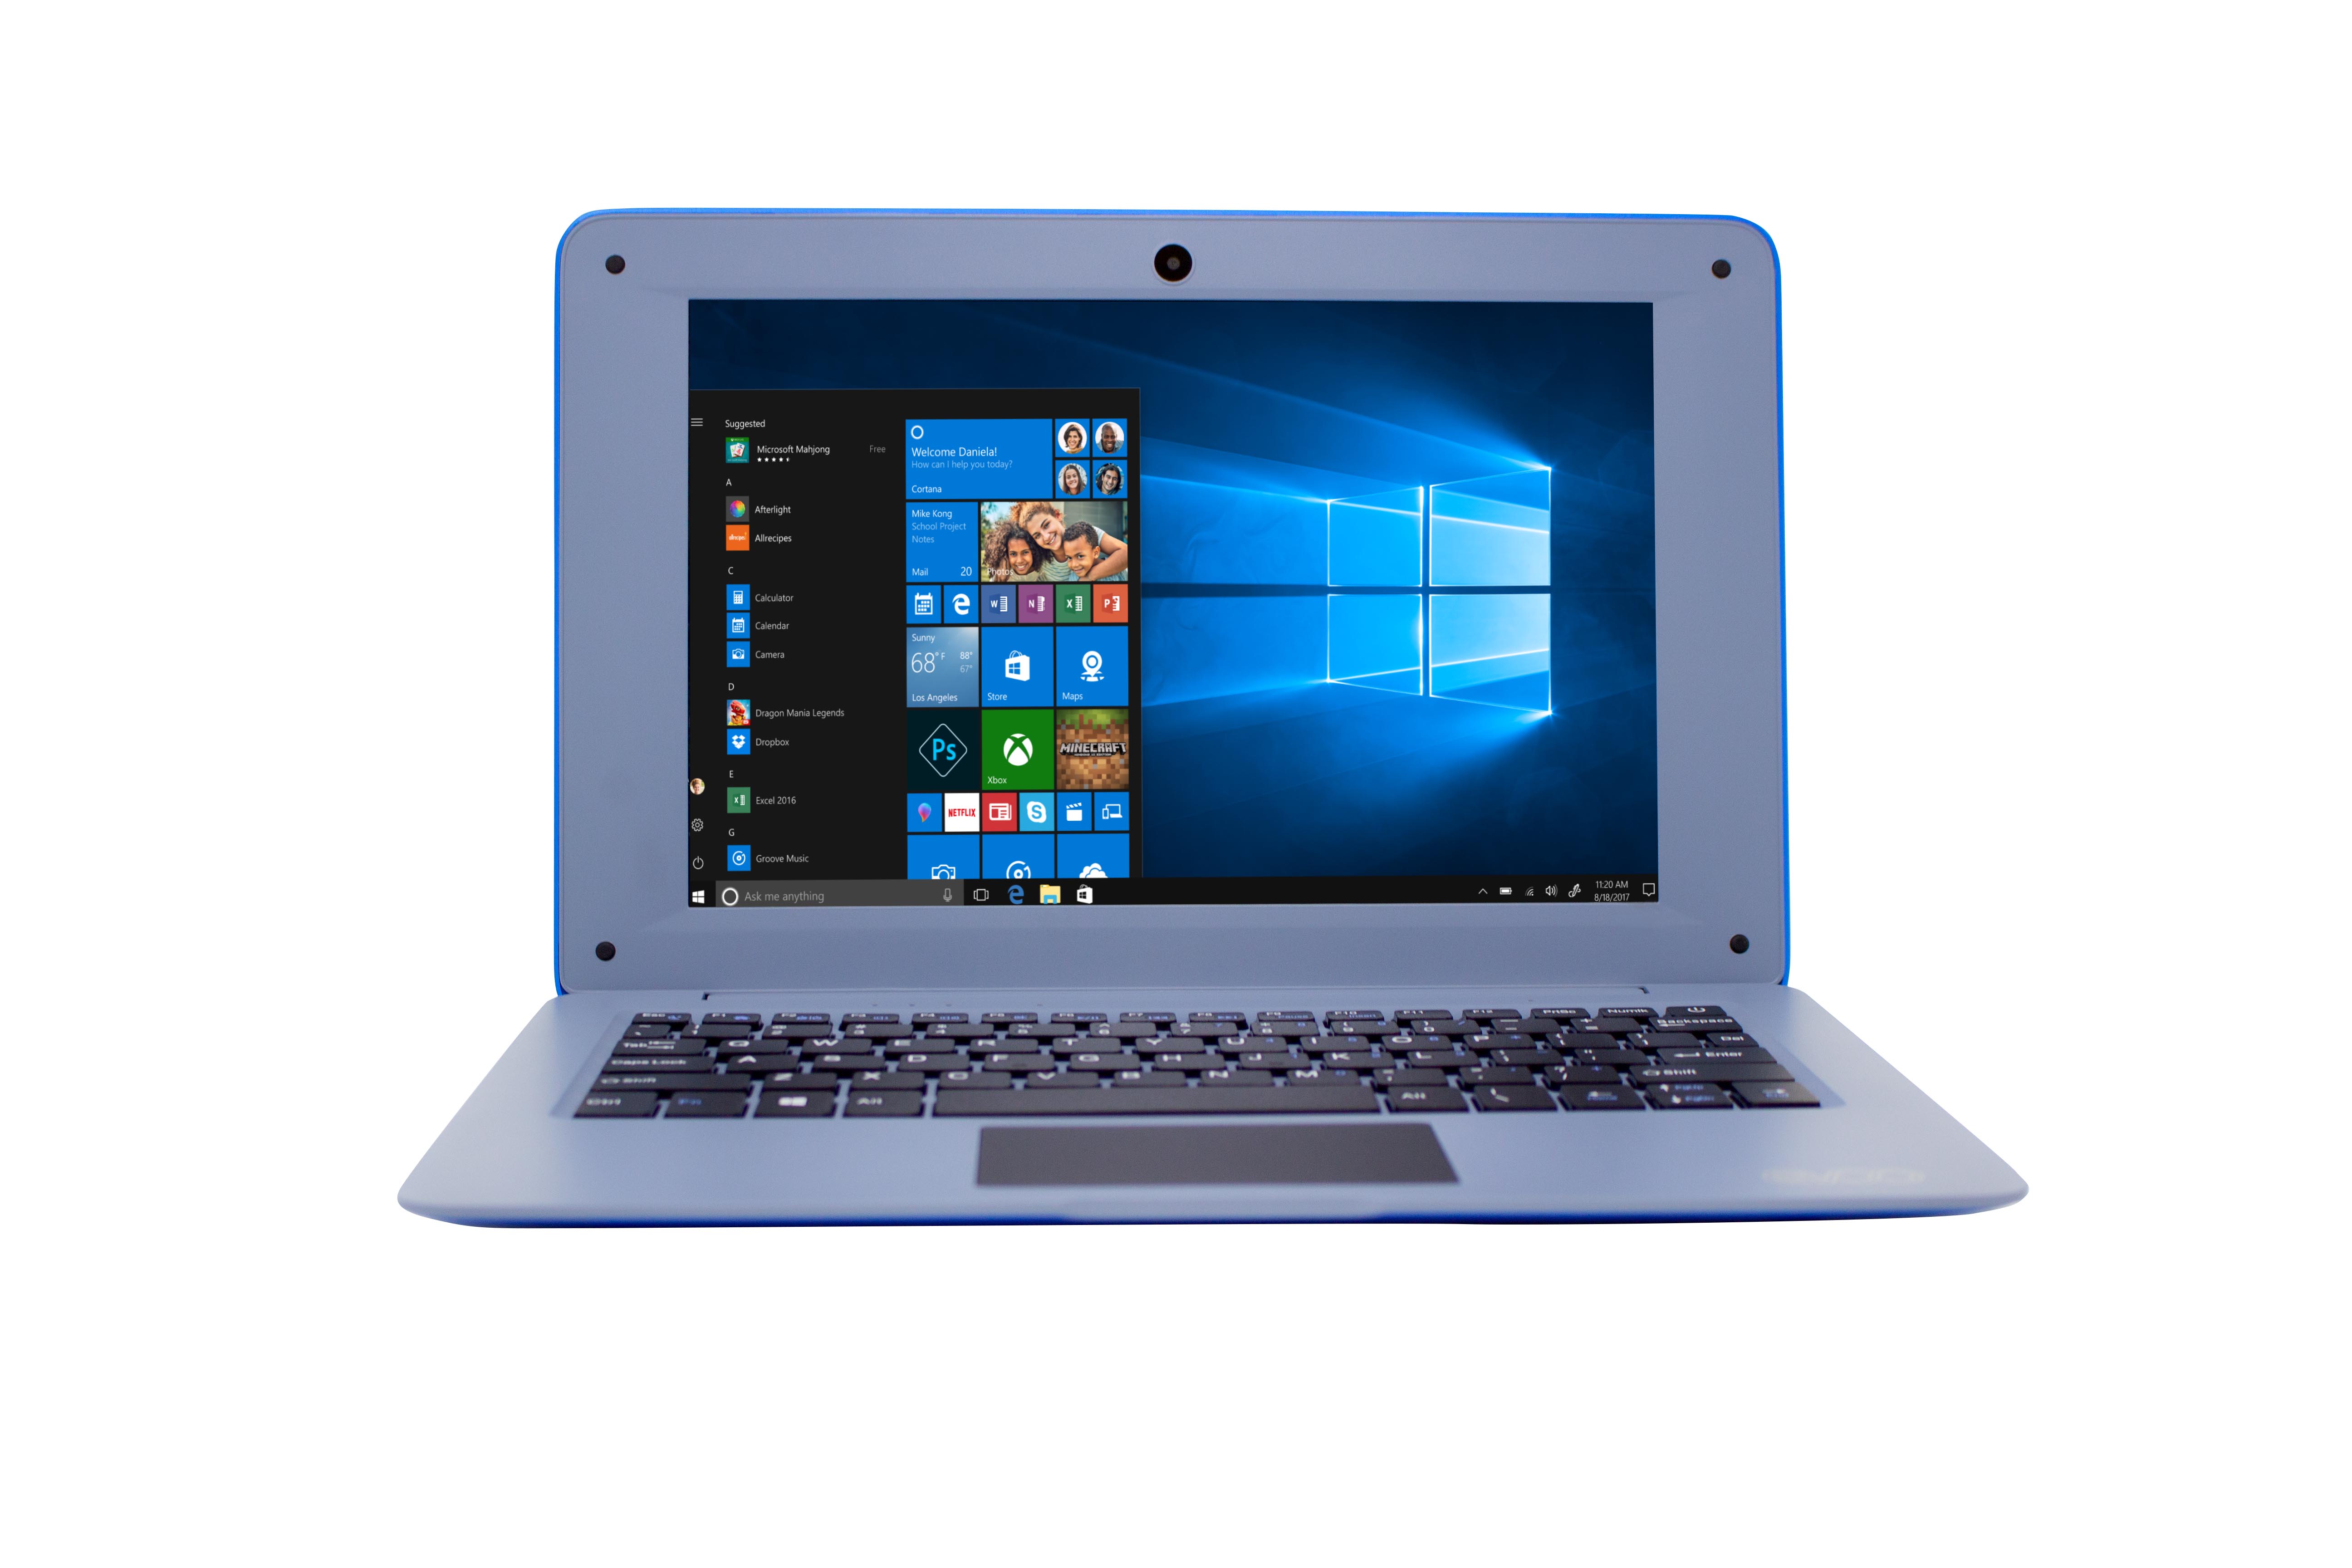 EVOO 10.1" Ultra Thin Laptop, Quad Core Processor, 2GB Memory, 32GB Storage, Mini HDMI, Front Camera, Windows 10 Home, Blue - image 2 of 7